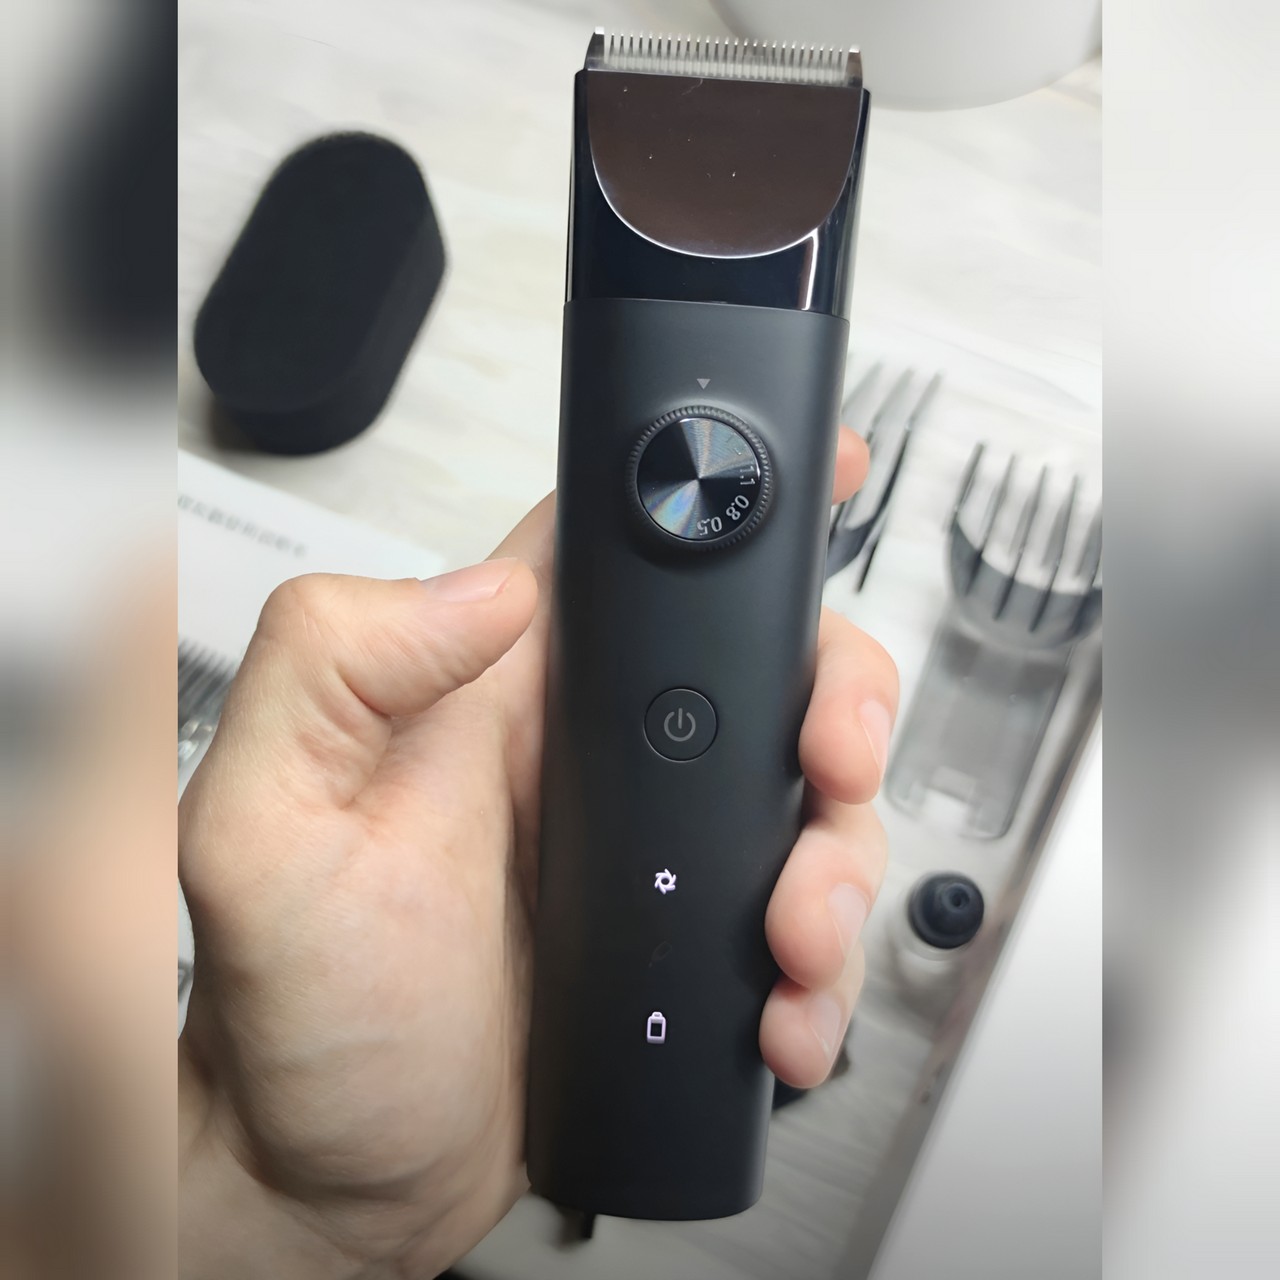 Машинка для стрижки волос Xiaomi Mijia